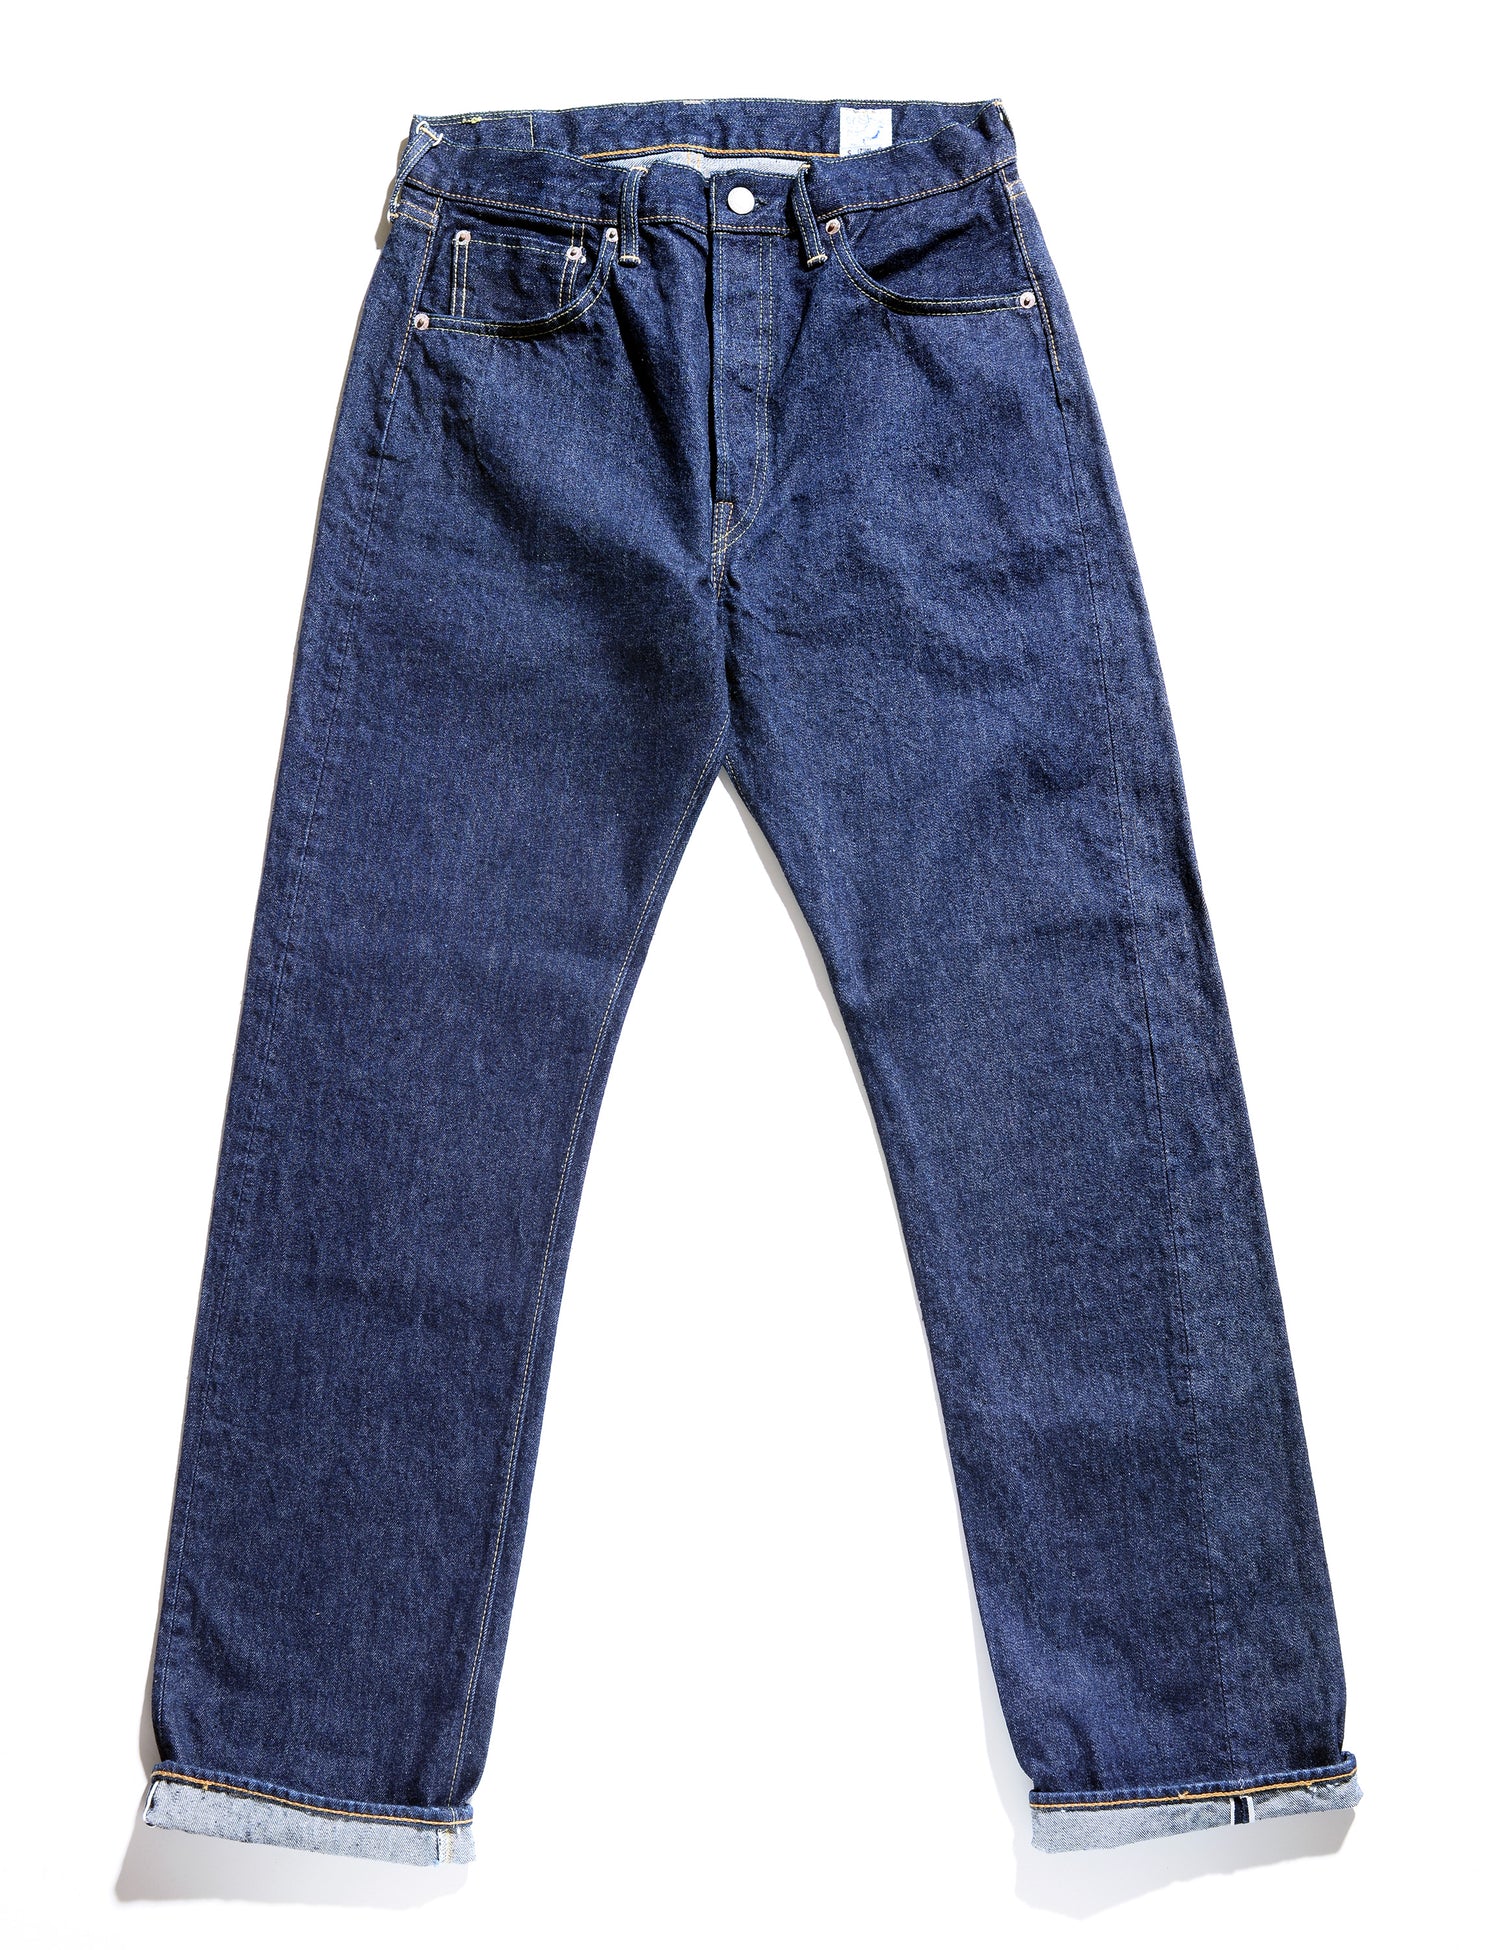 RRL Slim Fit Selvedge Denim Jeans - Ridgecrest Wash | Jeans | Huckberry